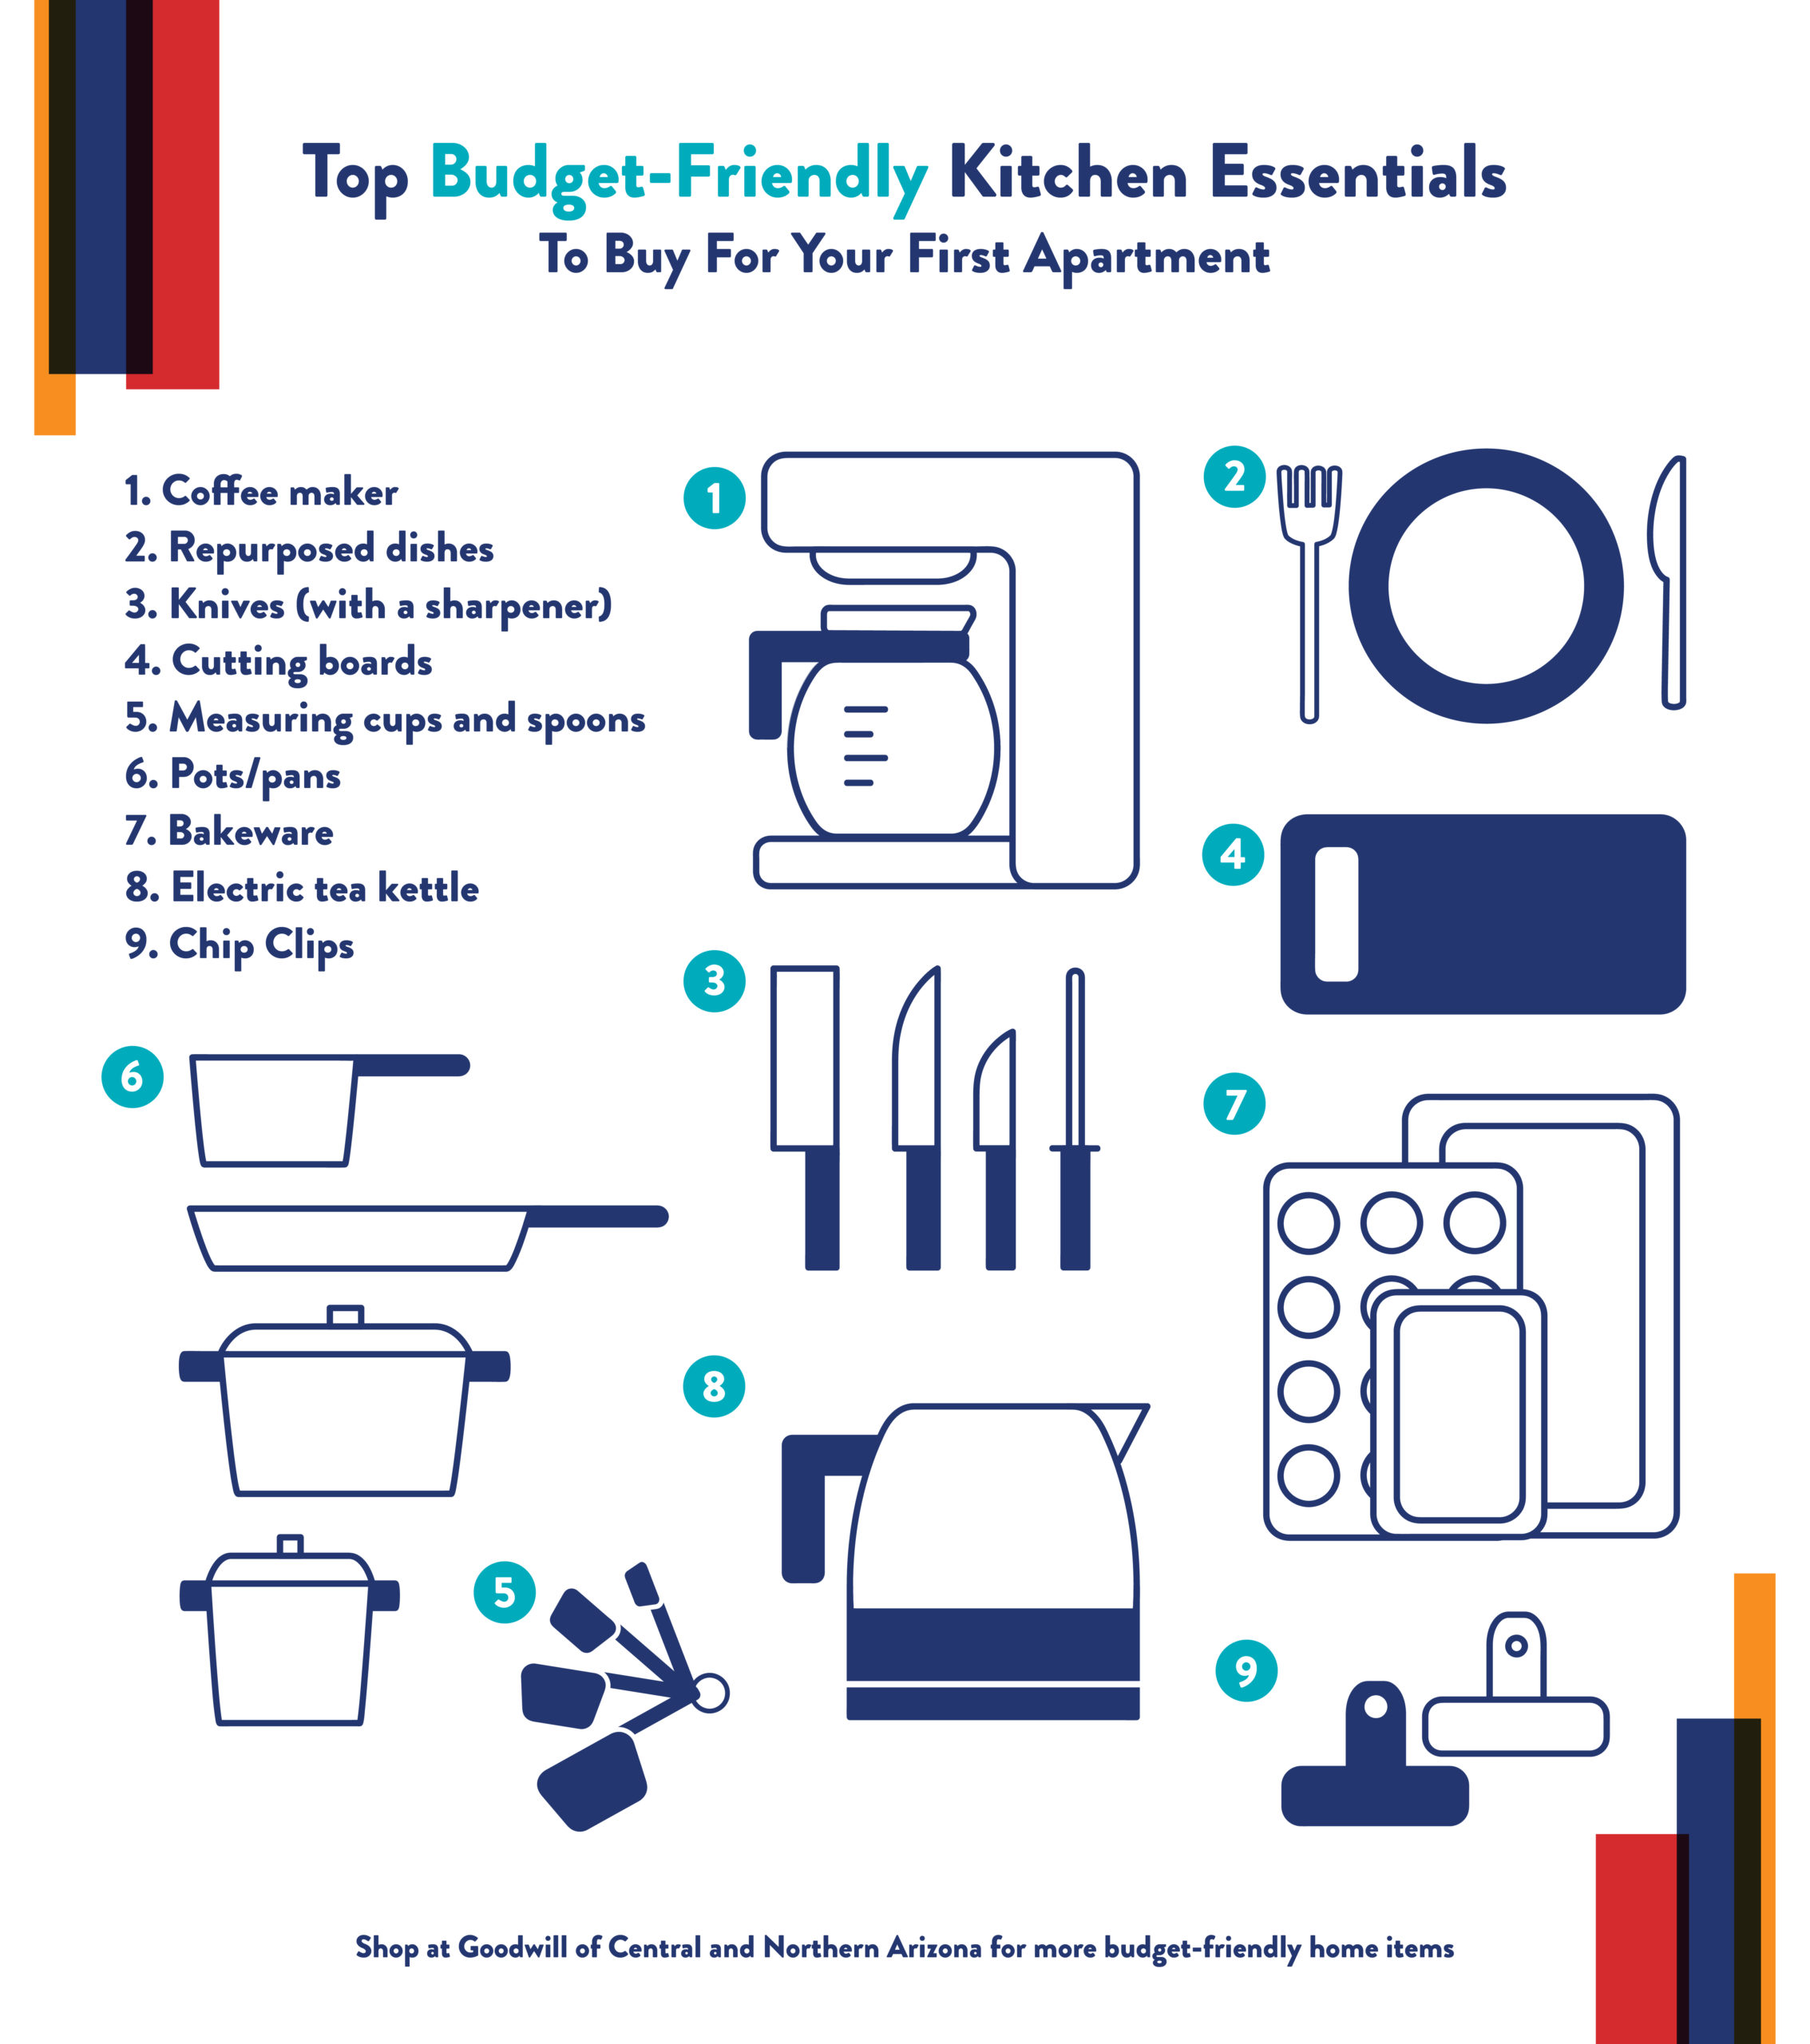 Budget-friendly cooking essentials